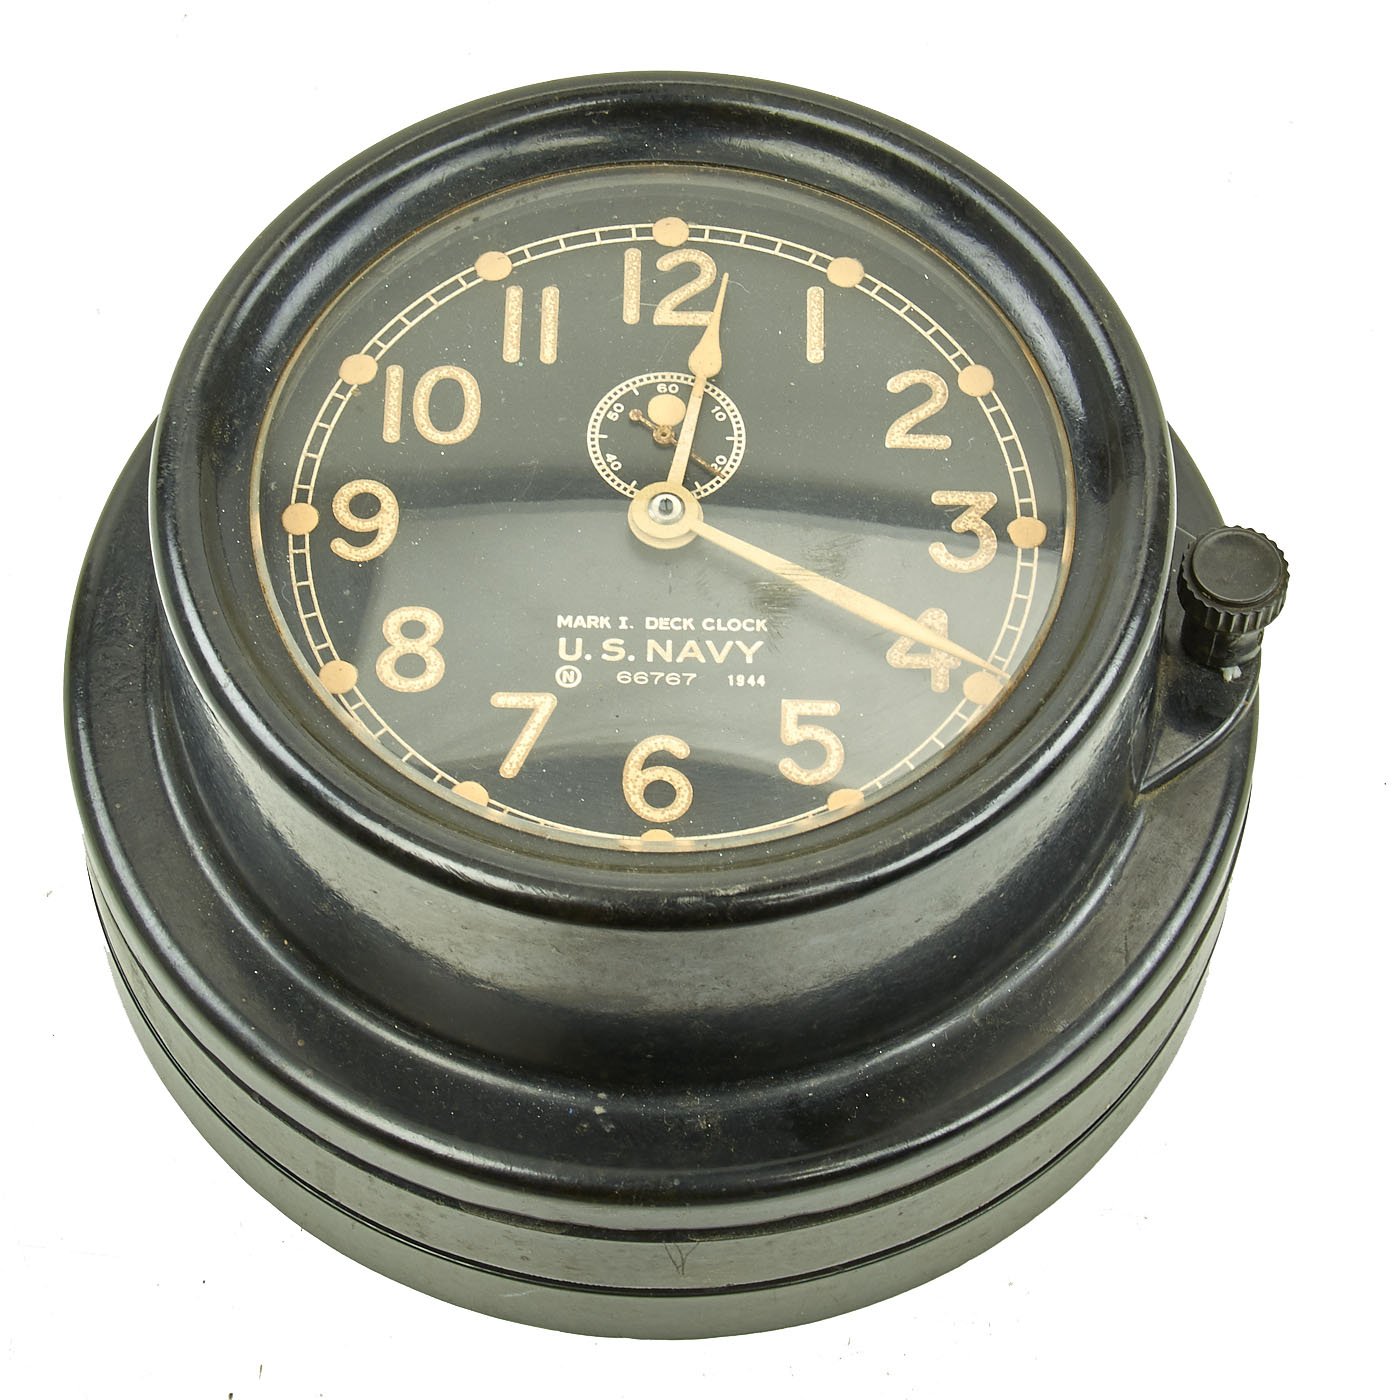 Original WWII U.S. Navy Mark I. Deck Clock by Chelsea Clock Co